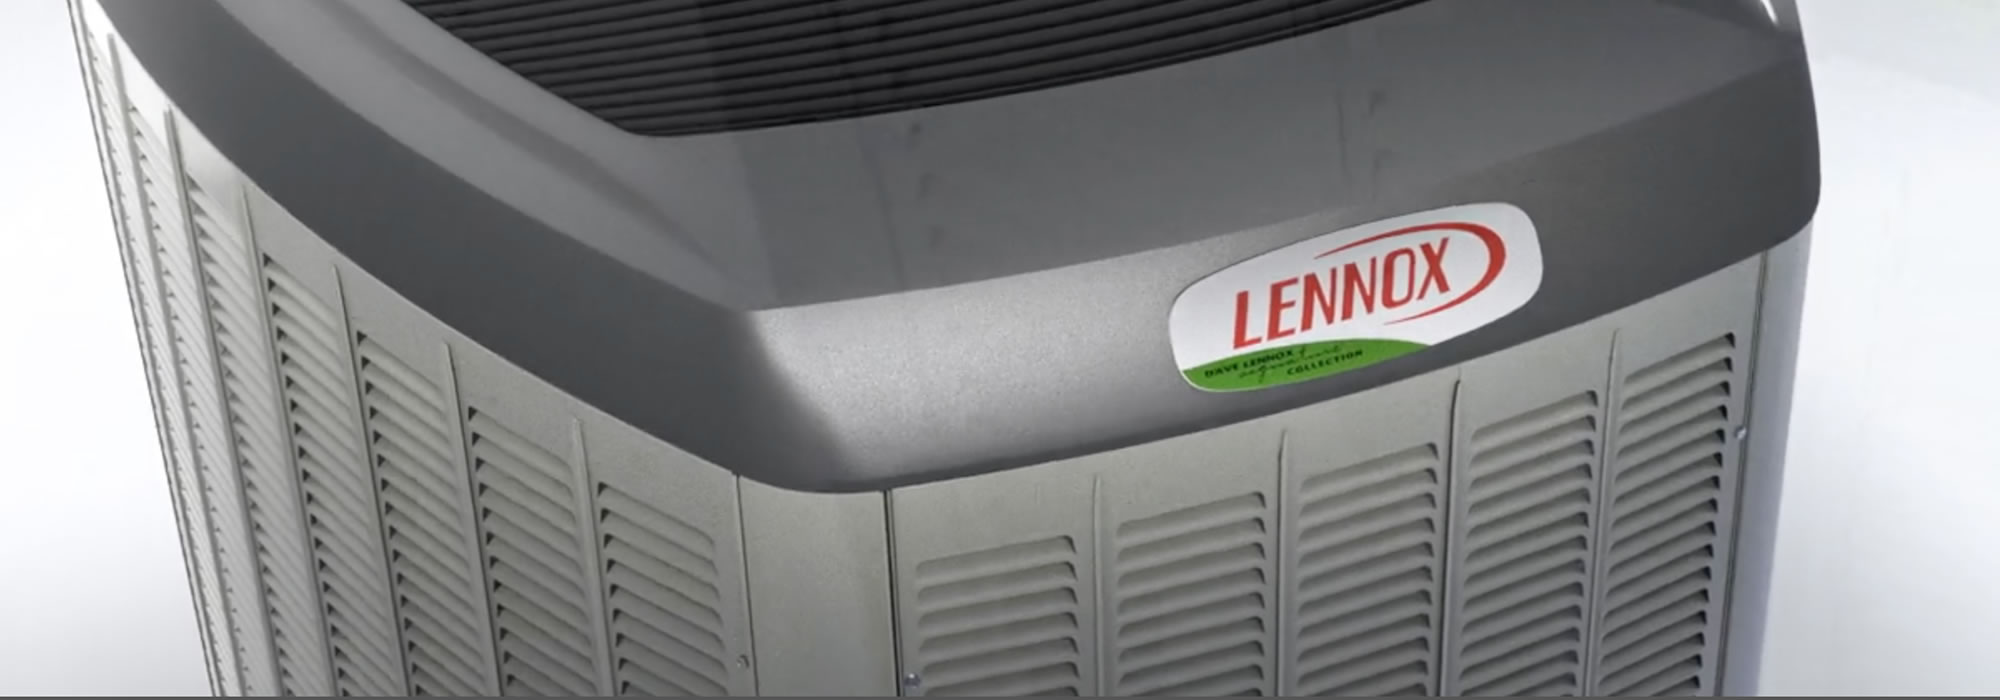 lennox furnace parts locally